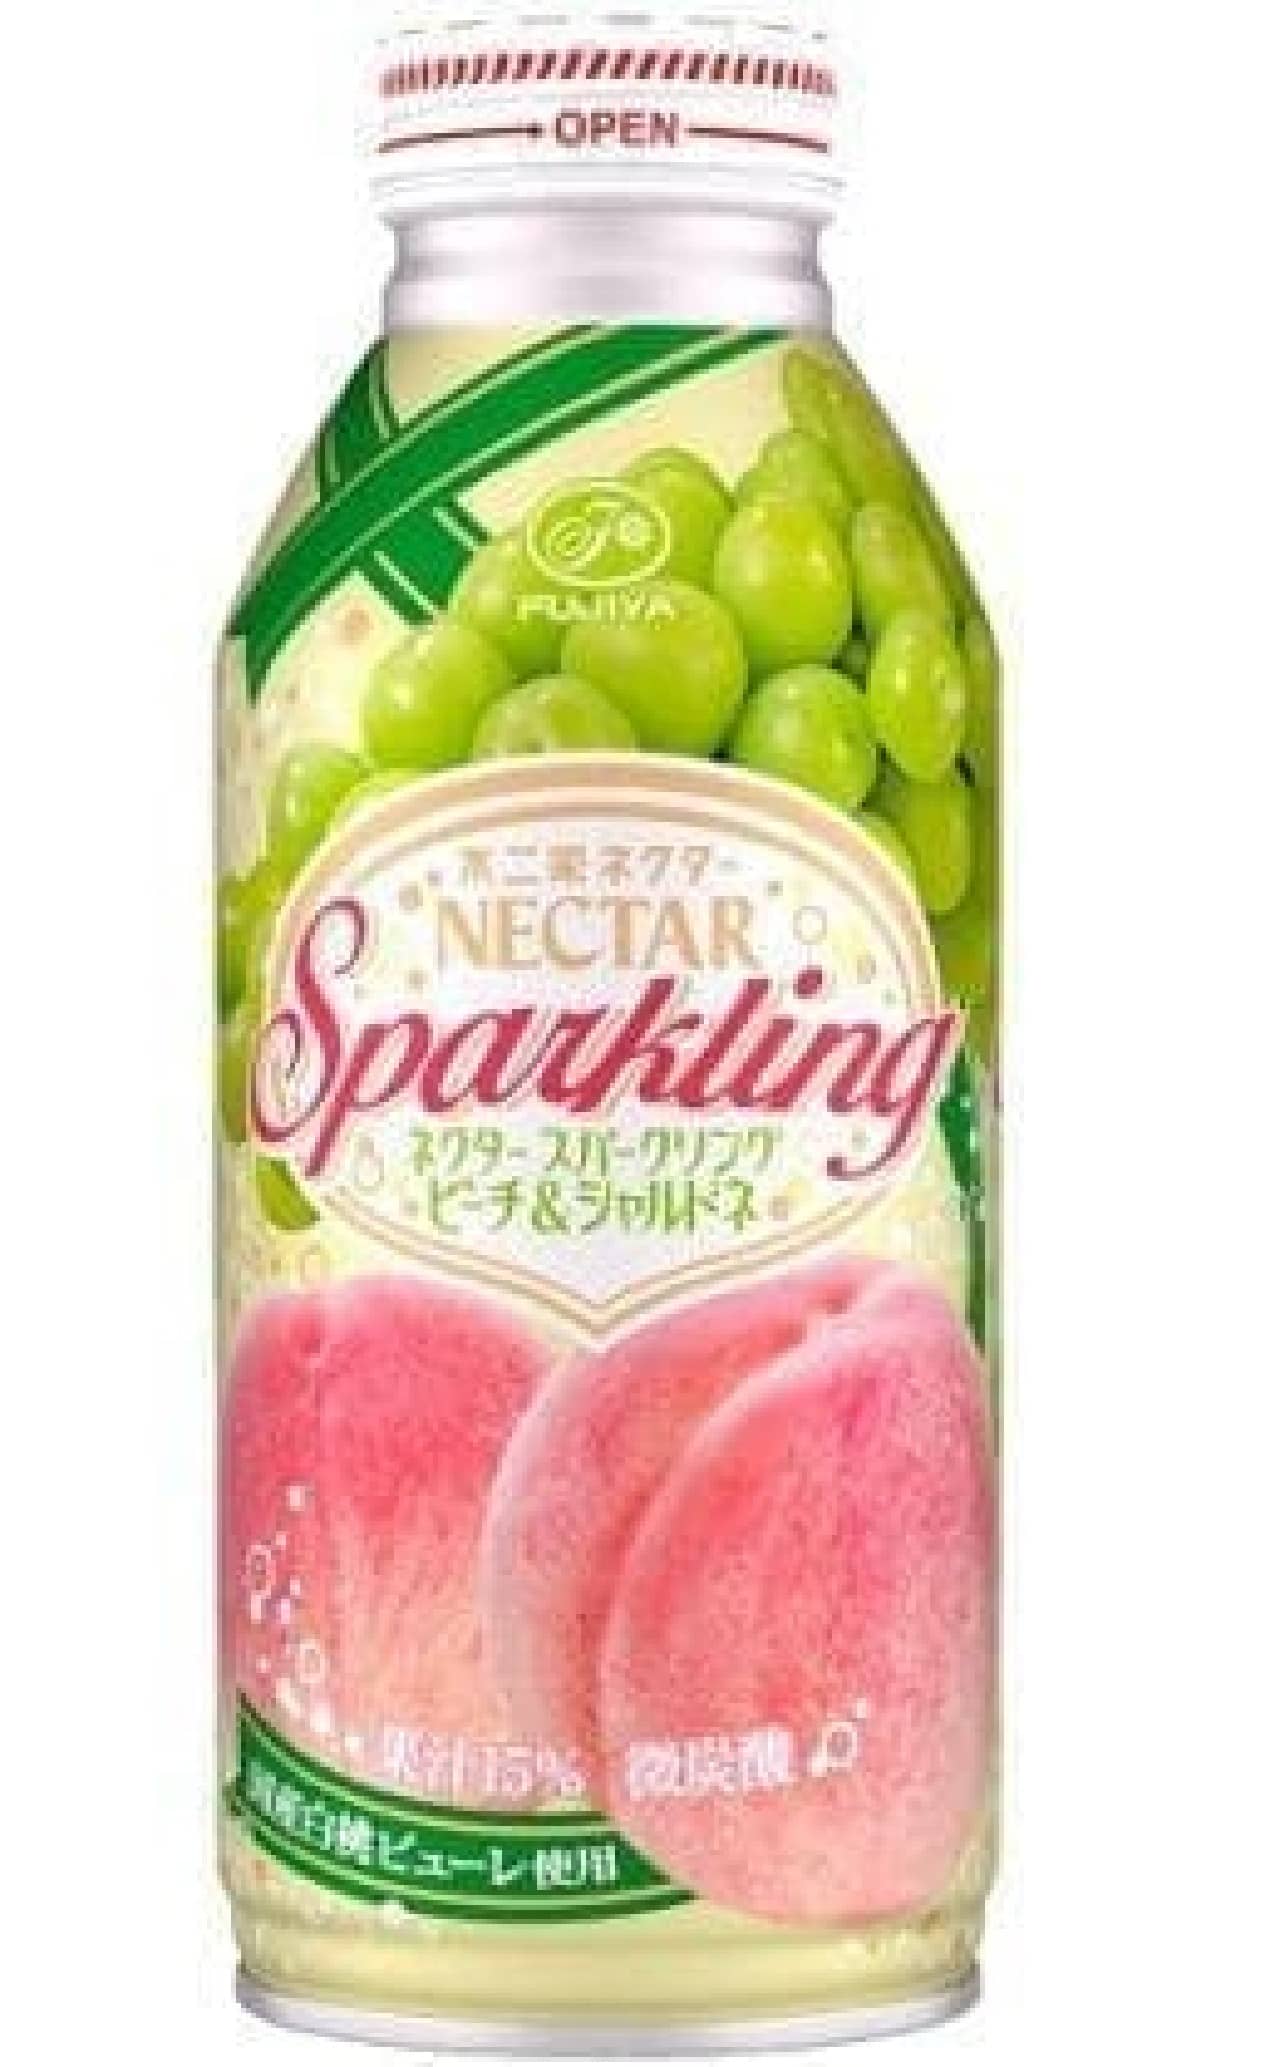 Fujiya Nectar "Nectar Sparkling Peach & Chardonnay"